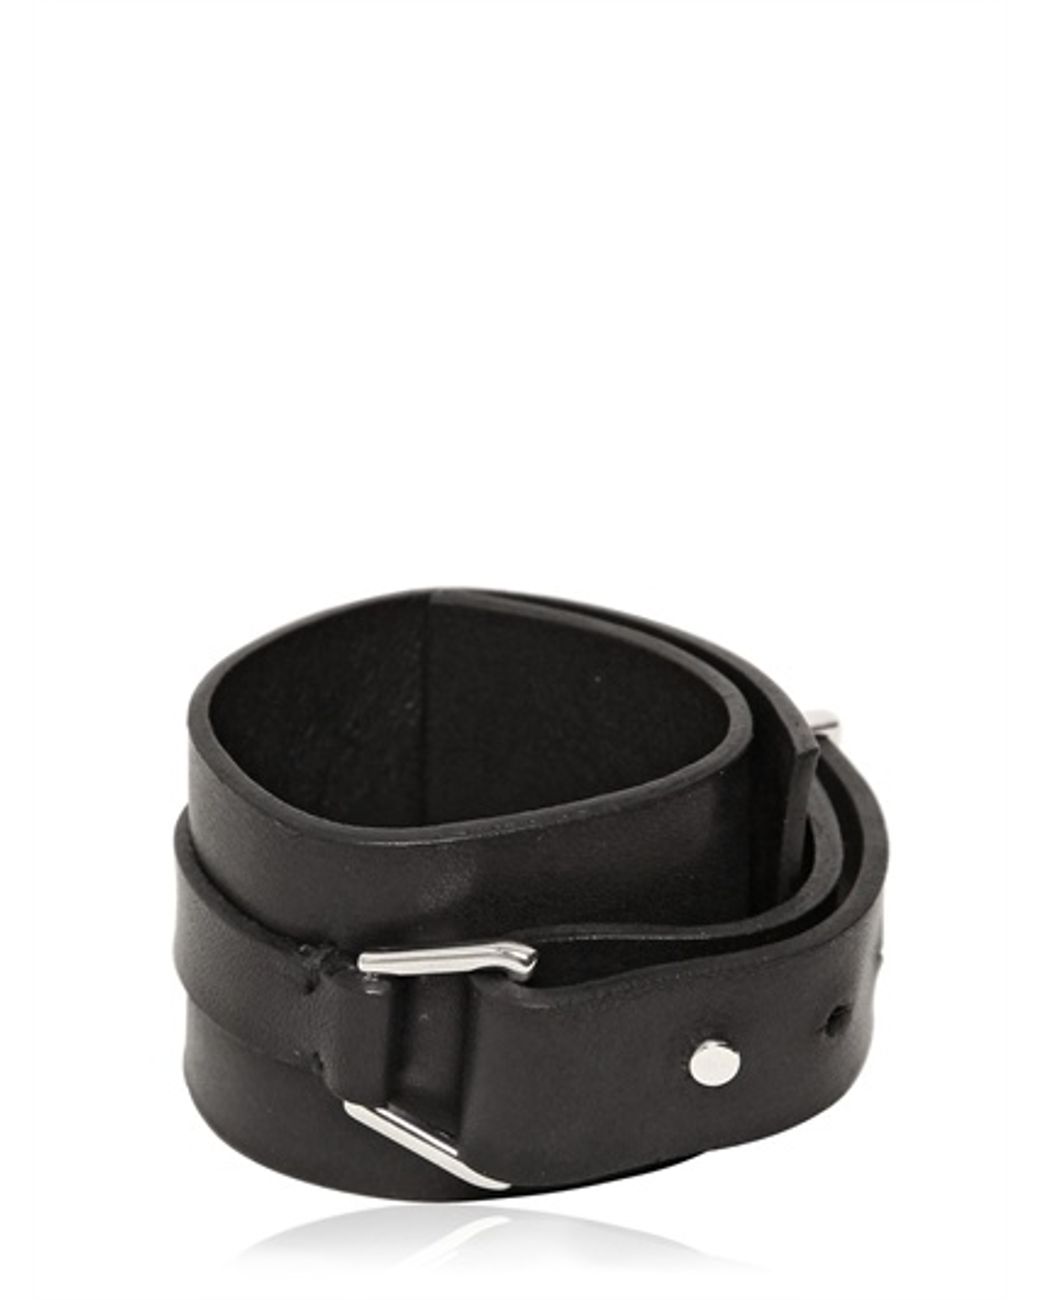 Balmain Leather Wrap Bracelet in Black for Men